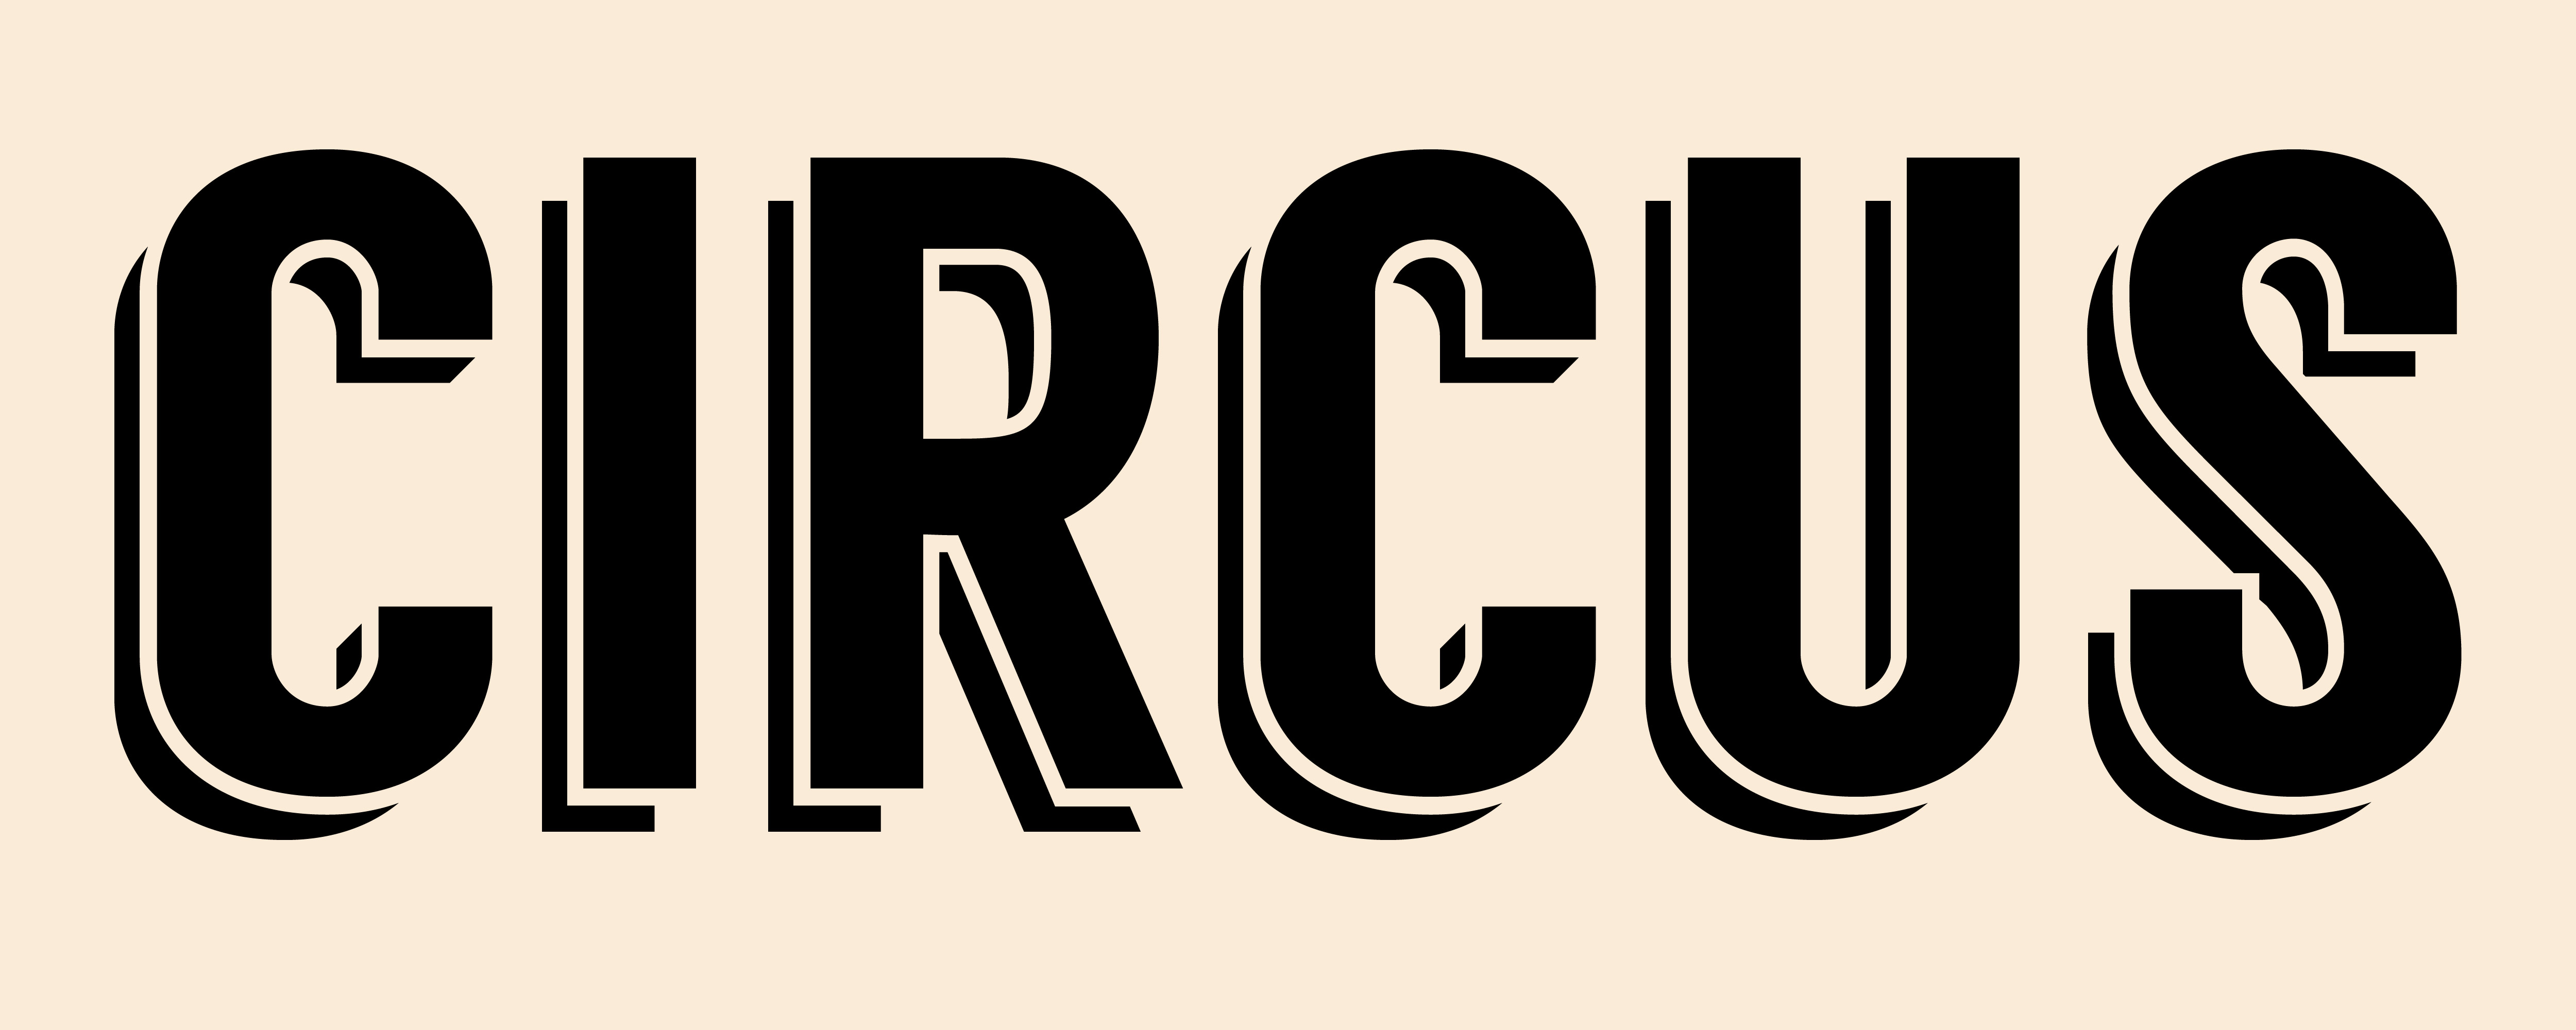 circus-logo - Carousel Blog